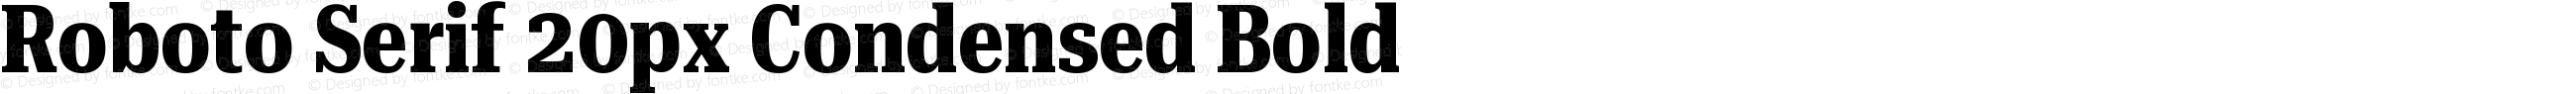 Roboto Serif 20px Condensed Bold